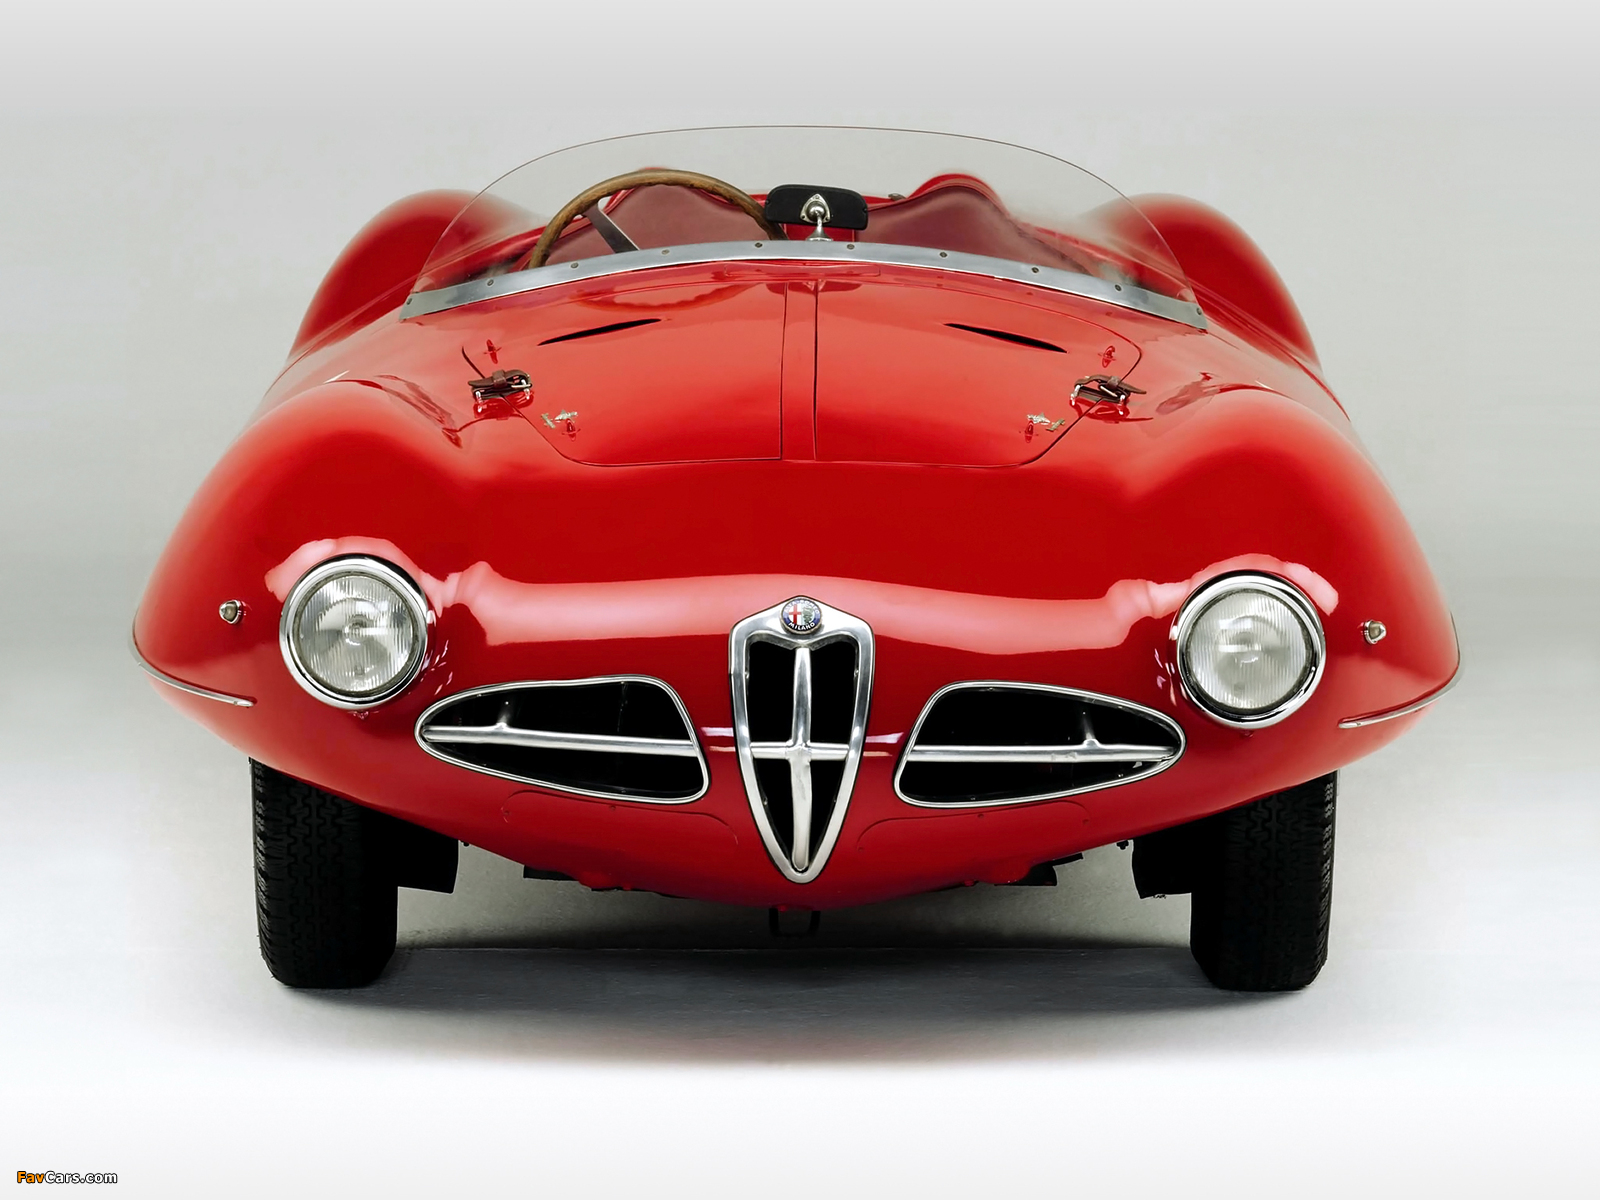 Alfa Romeo 1900 C52 Disco Volante Spider 1359 (1952) photos (1600 x 1200)